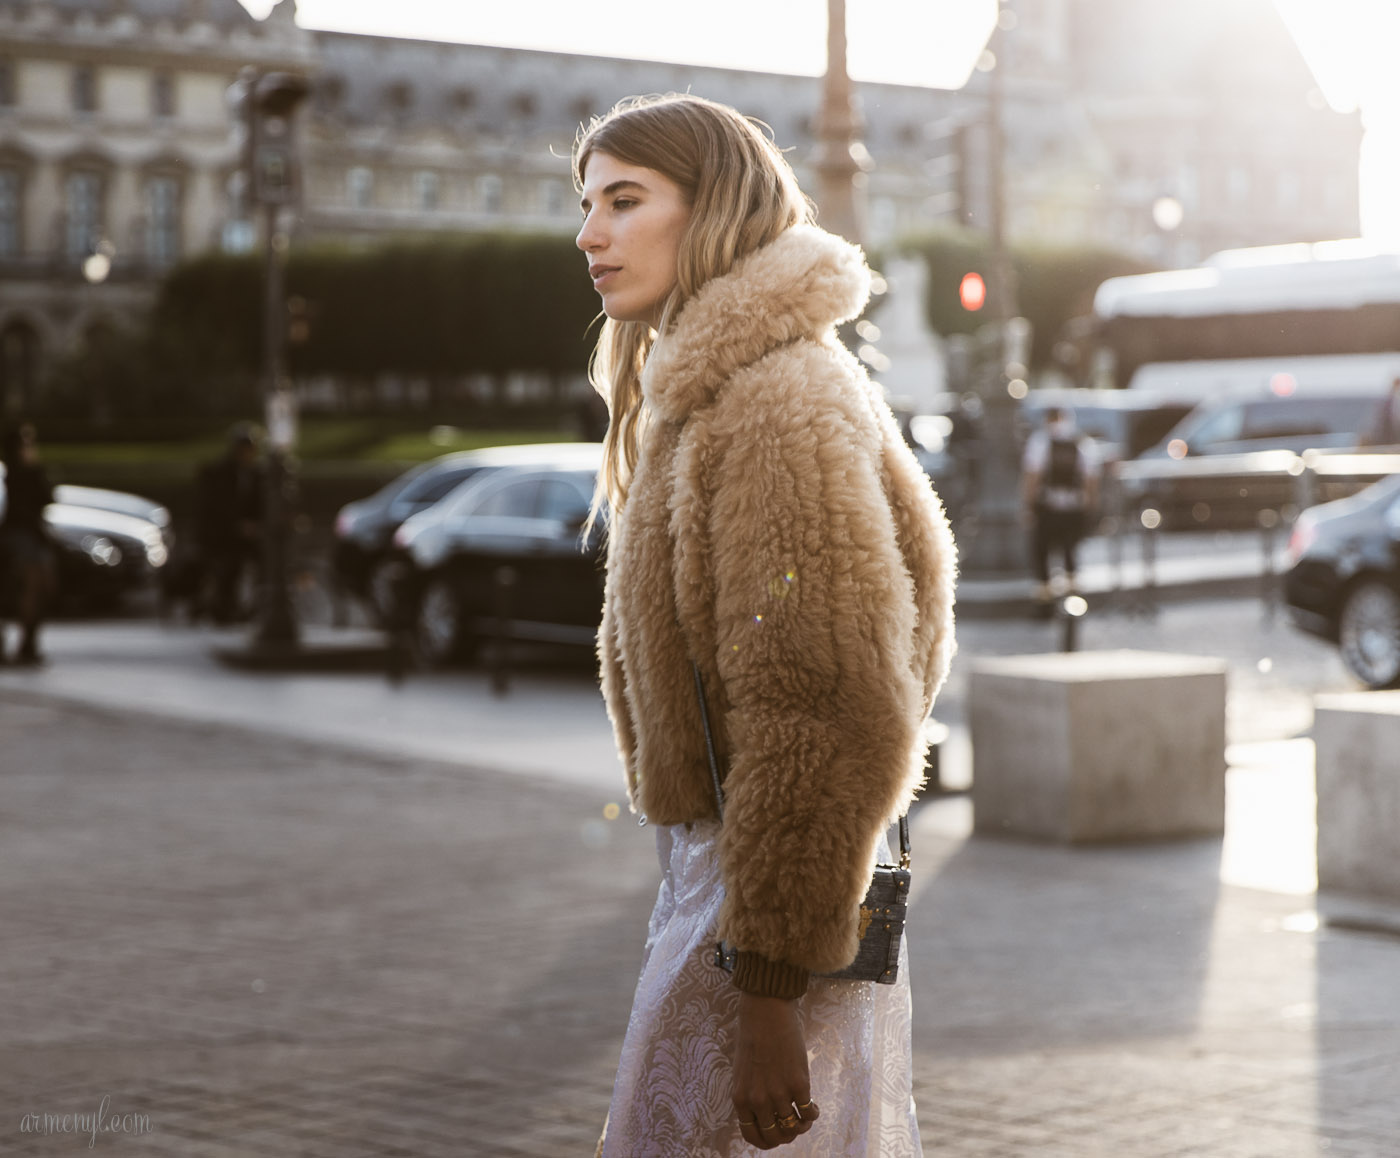 Veronika Heilbrunner Street style Looks at Louis Vuitton photo by Armenyl